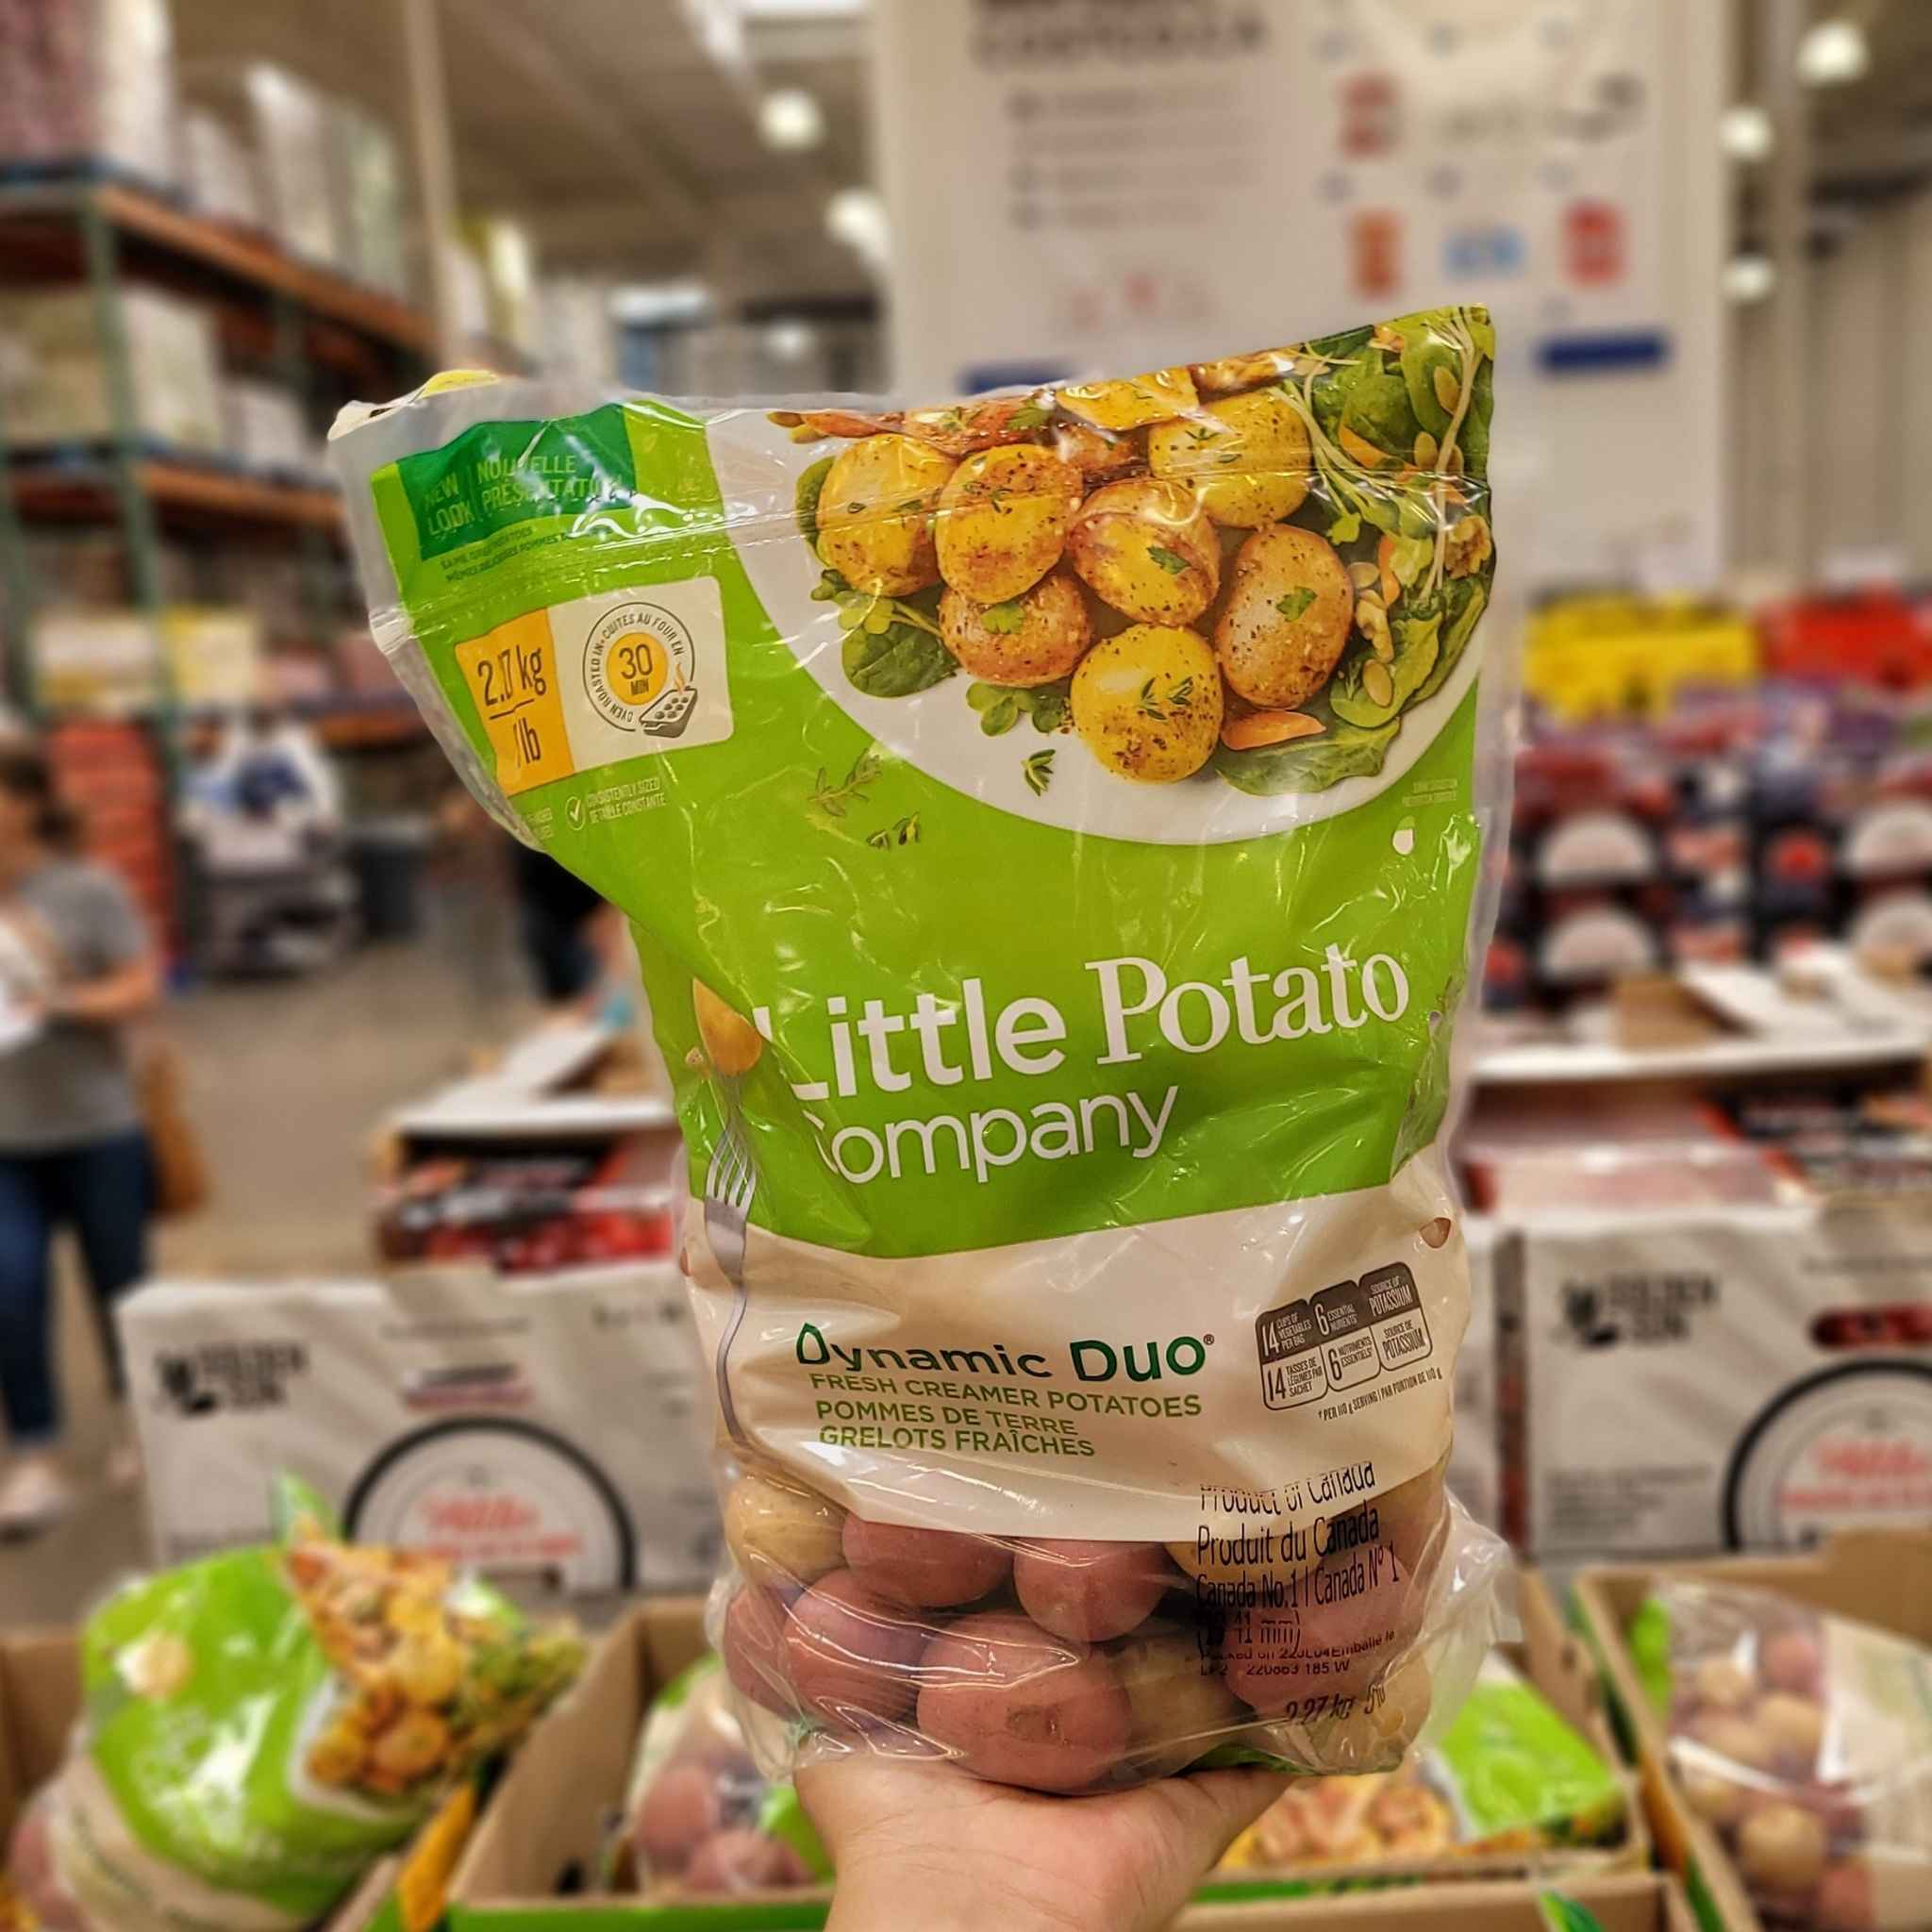 Little Potato Company Dynamic Duo – 3lb